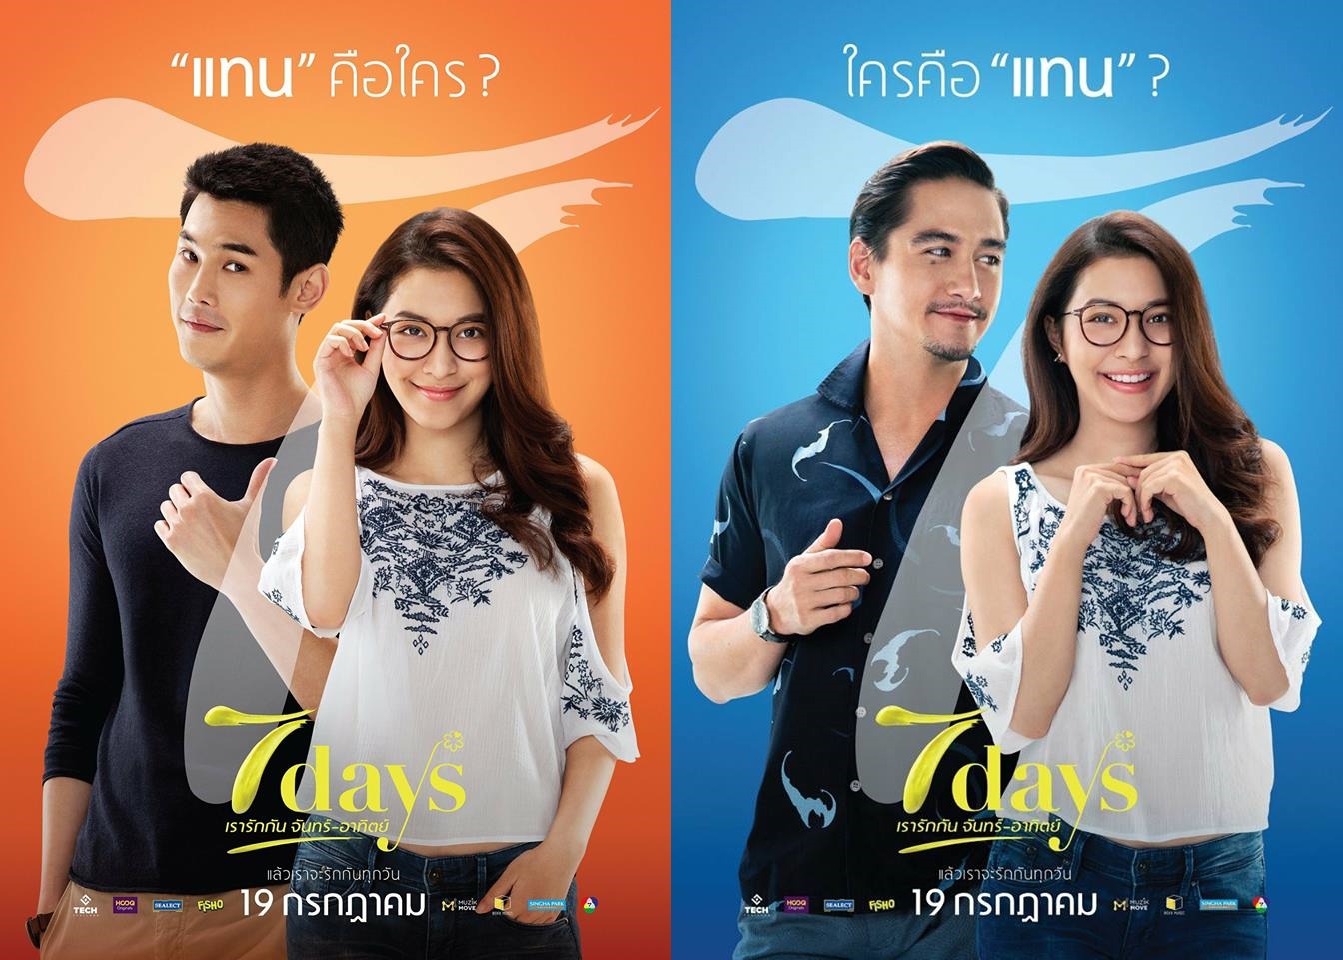 7 Days เรารักกันจันทร์-อาทิตย์ หนังไทยน้ำดี ที่ถ้าไม่ได้ดูตอนนี้จะเสียดาย - Pantip